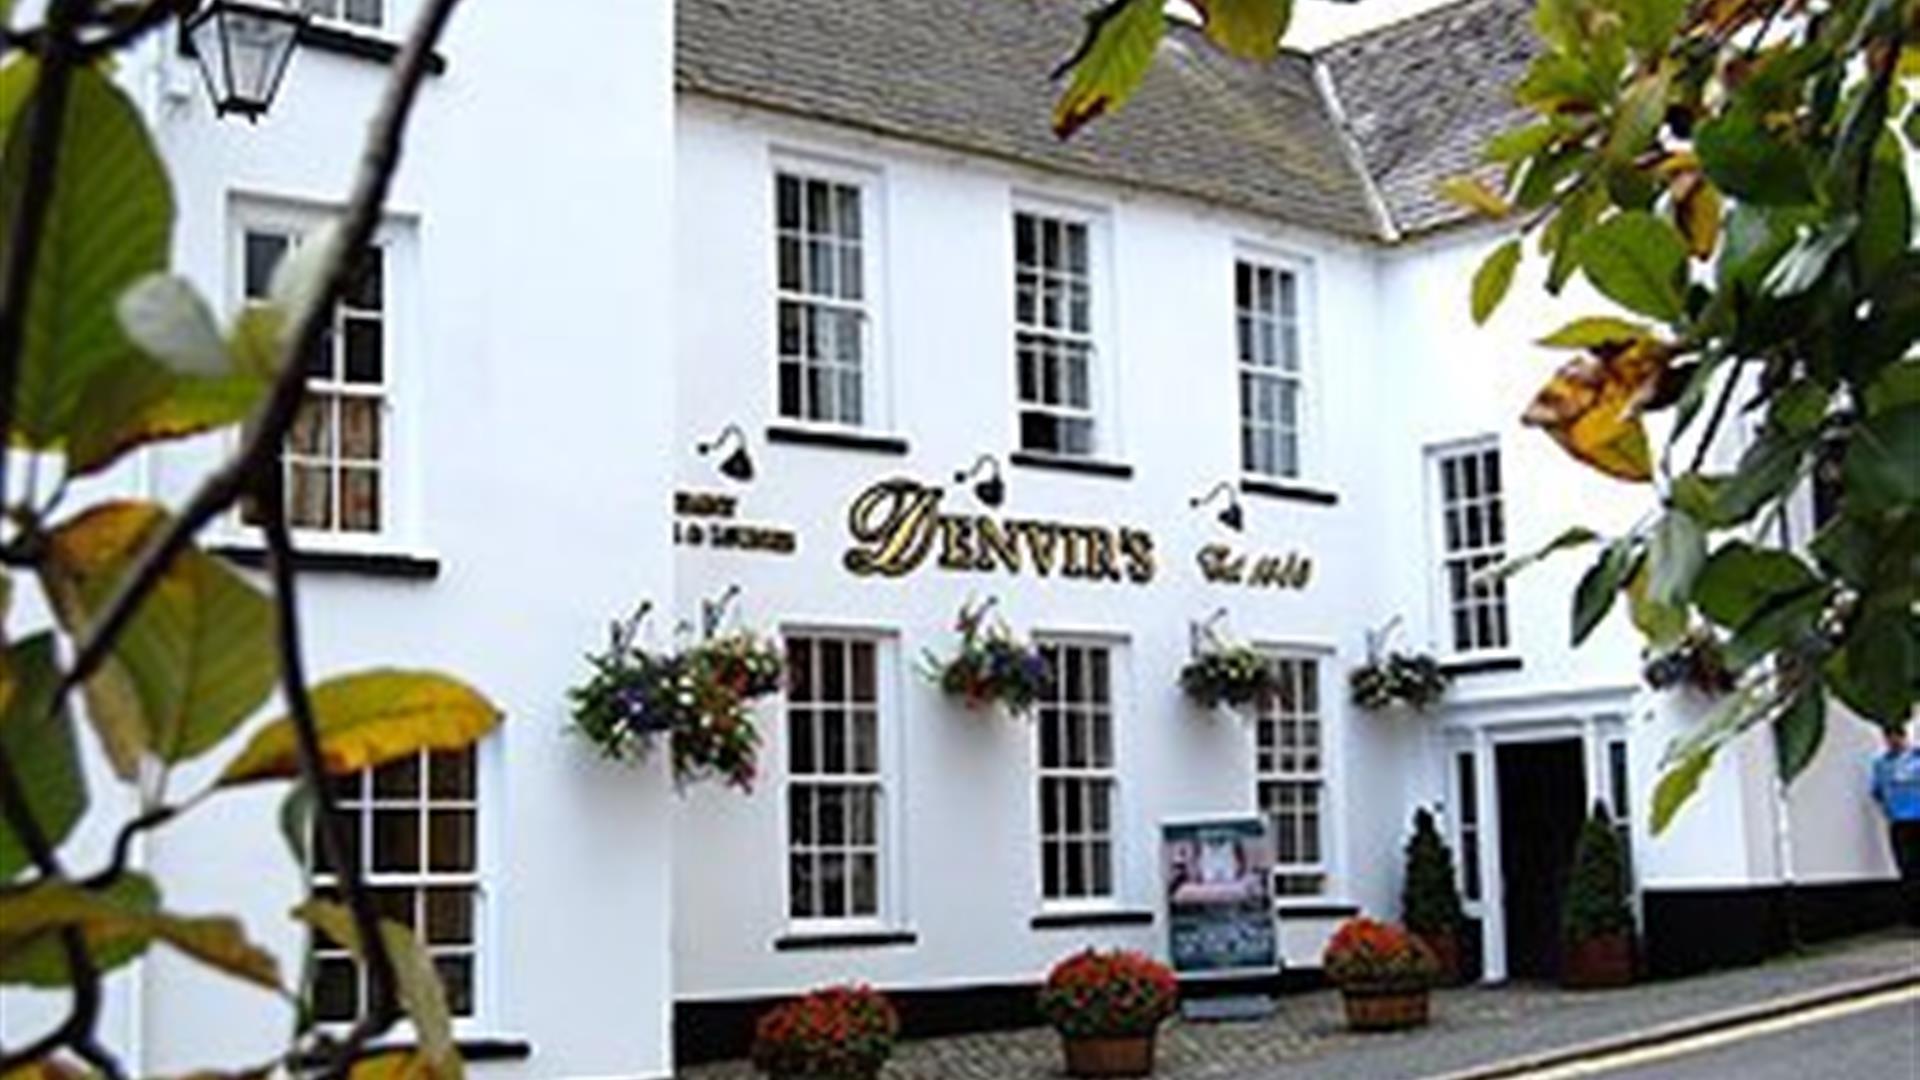 Denvir's Coaching Inn